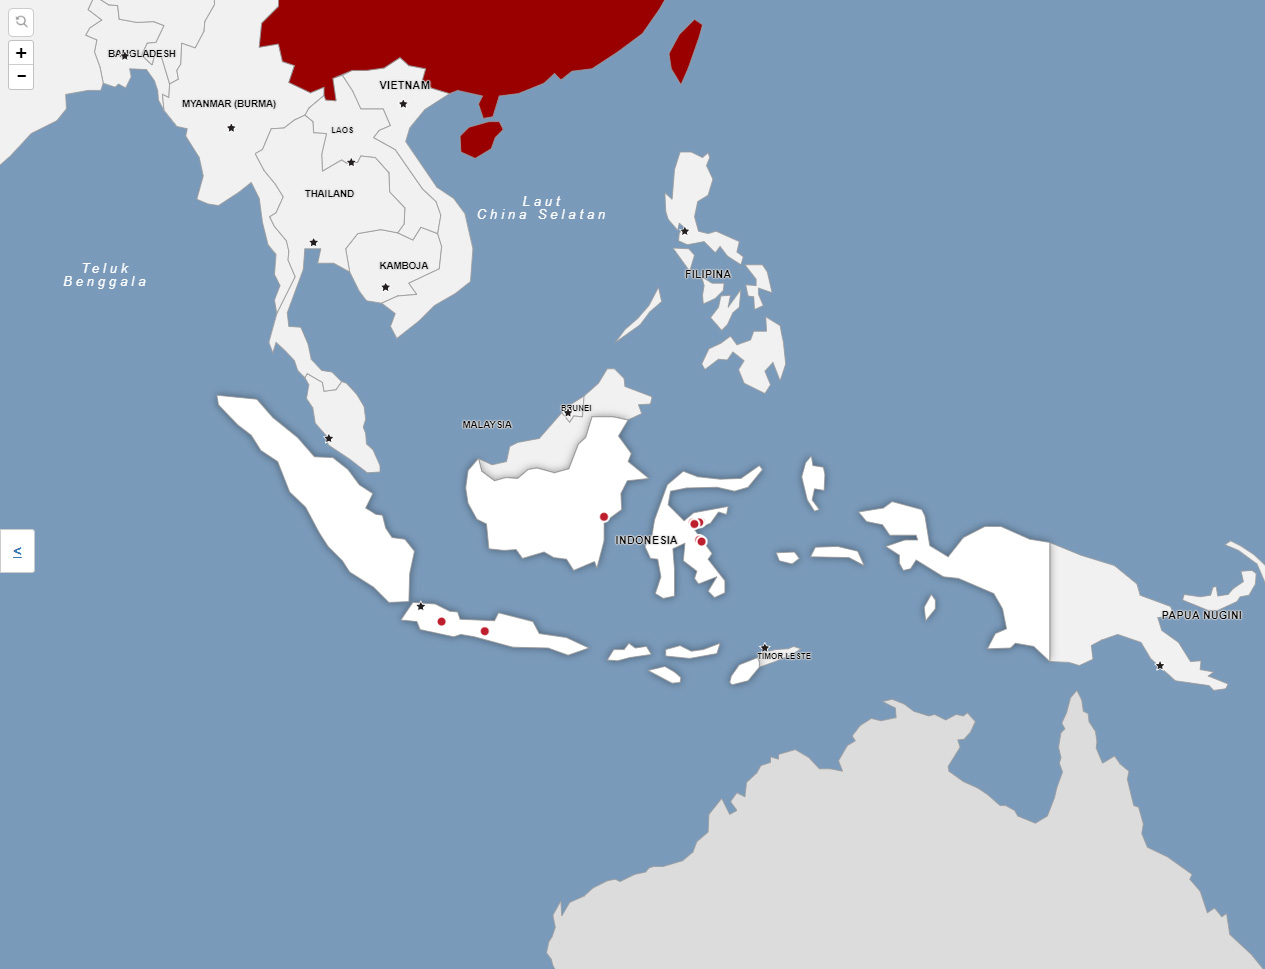 Peta Investasi Cina di Indonesia